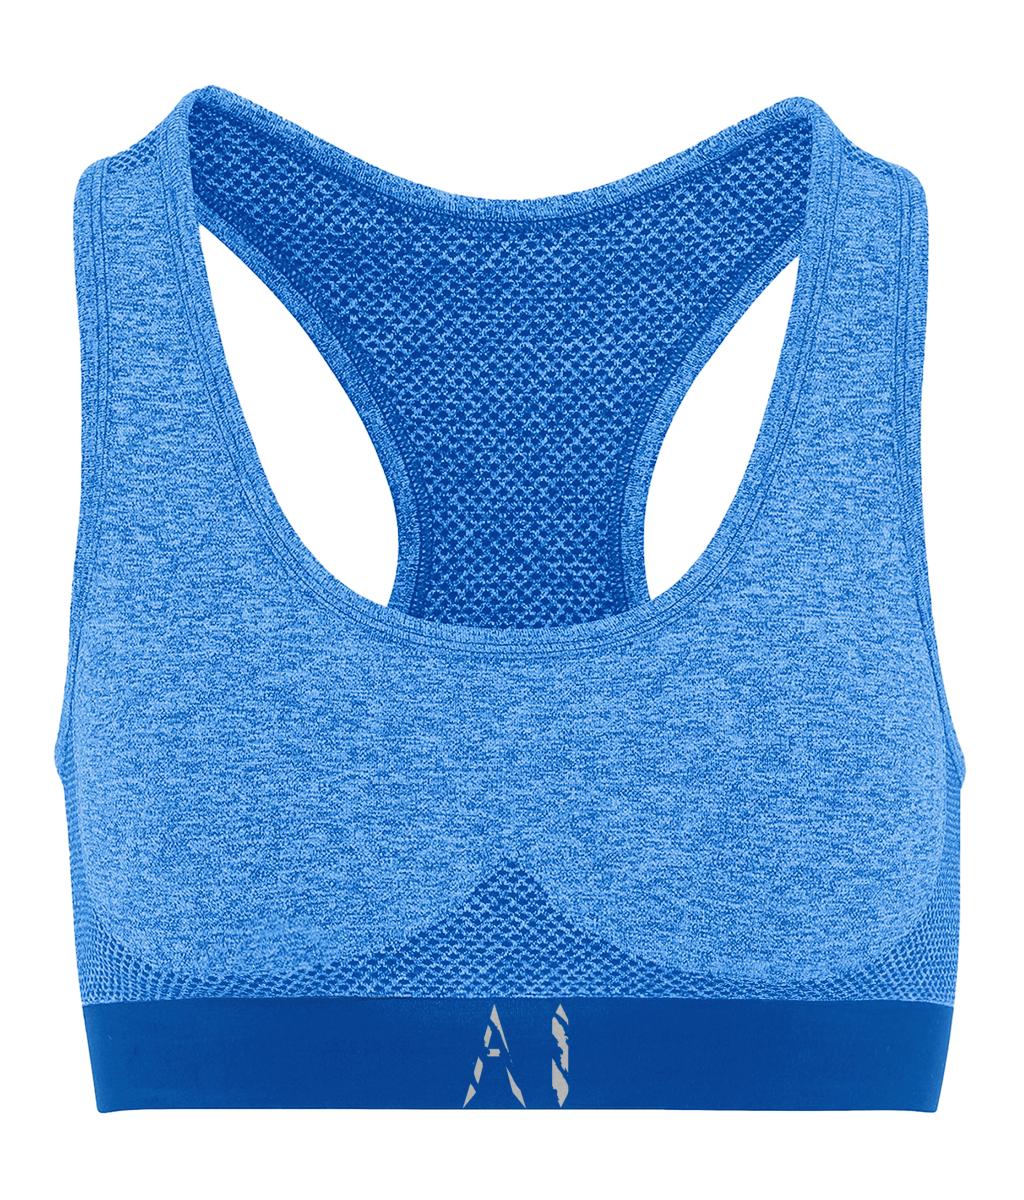 Womens blue Athletic Seamless Sports Bra with white AI logo on bottom strap